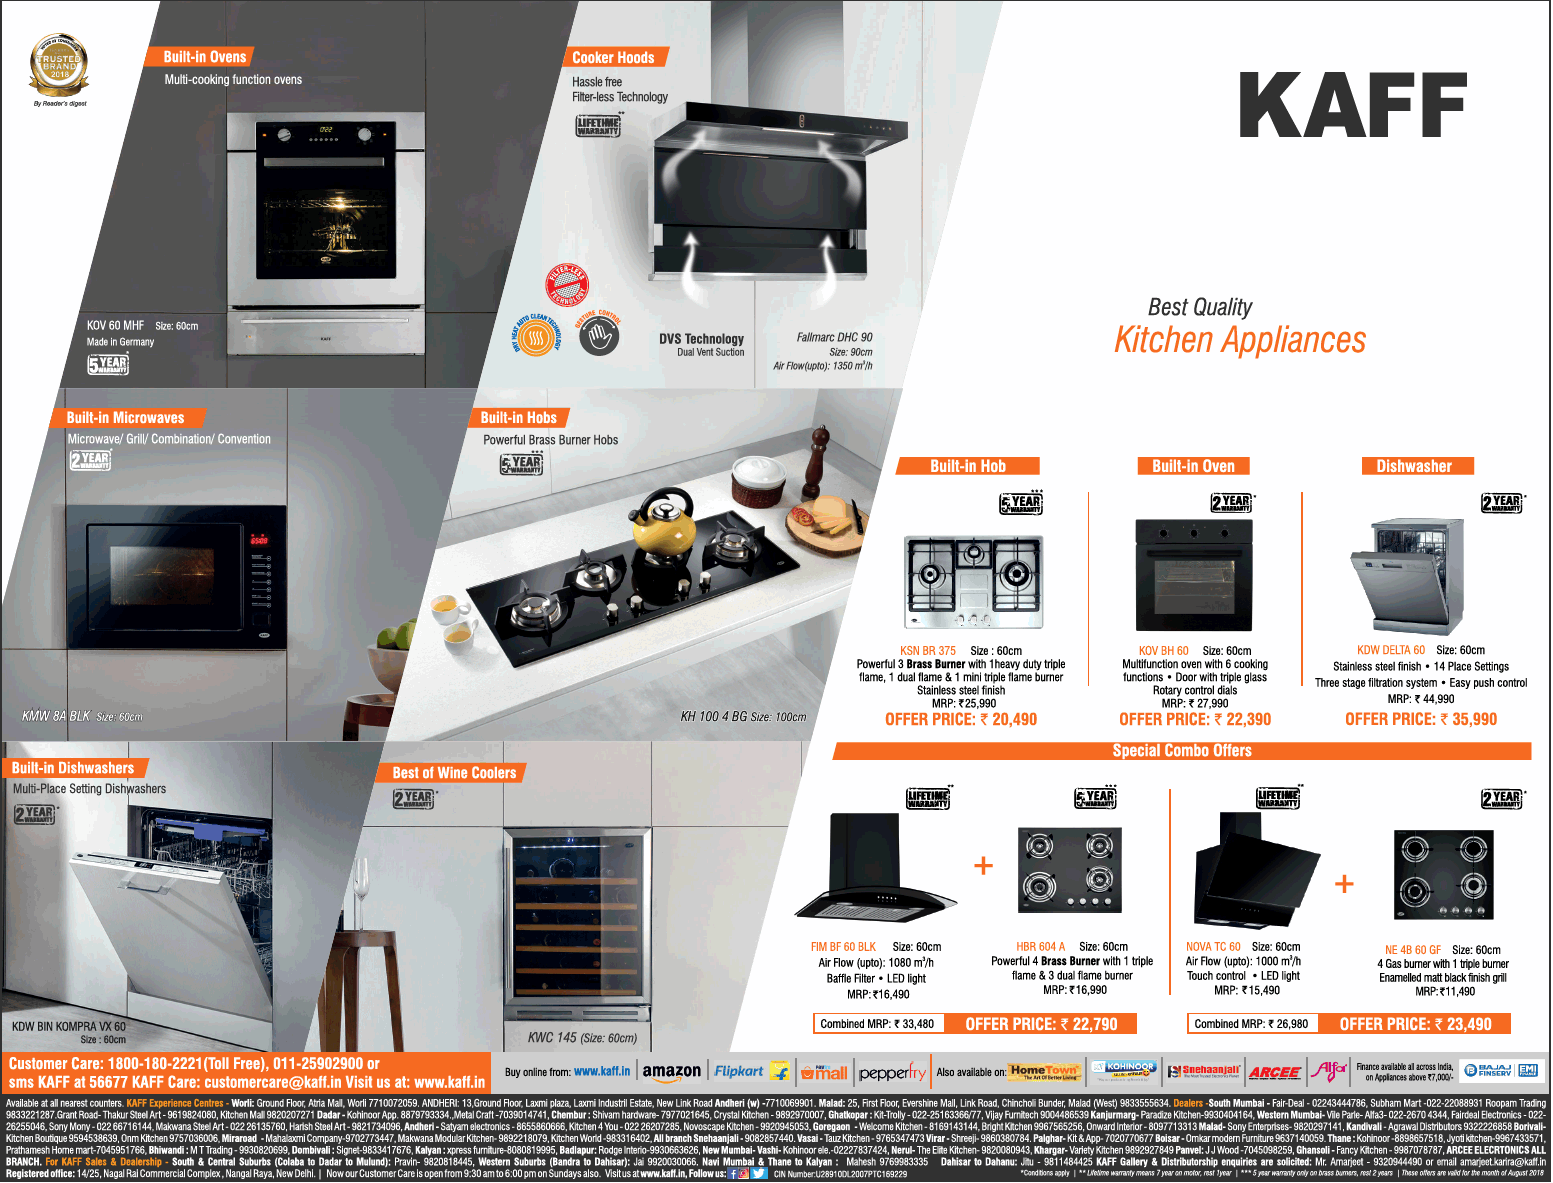 Kaff Appliances Best Quality Kitchen Appliances Ad Advert Gallery